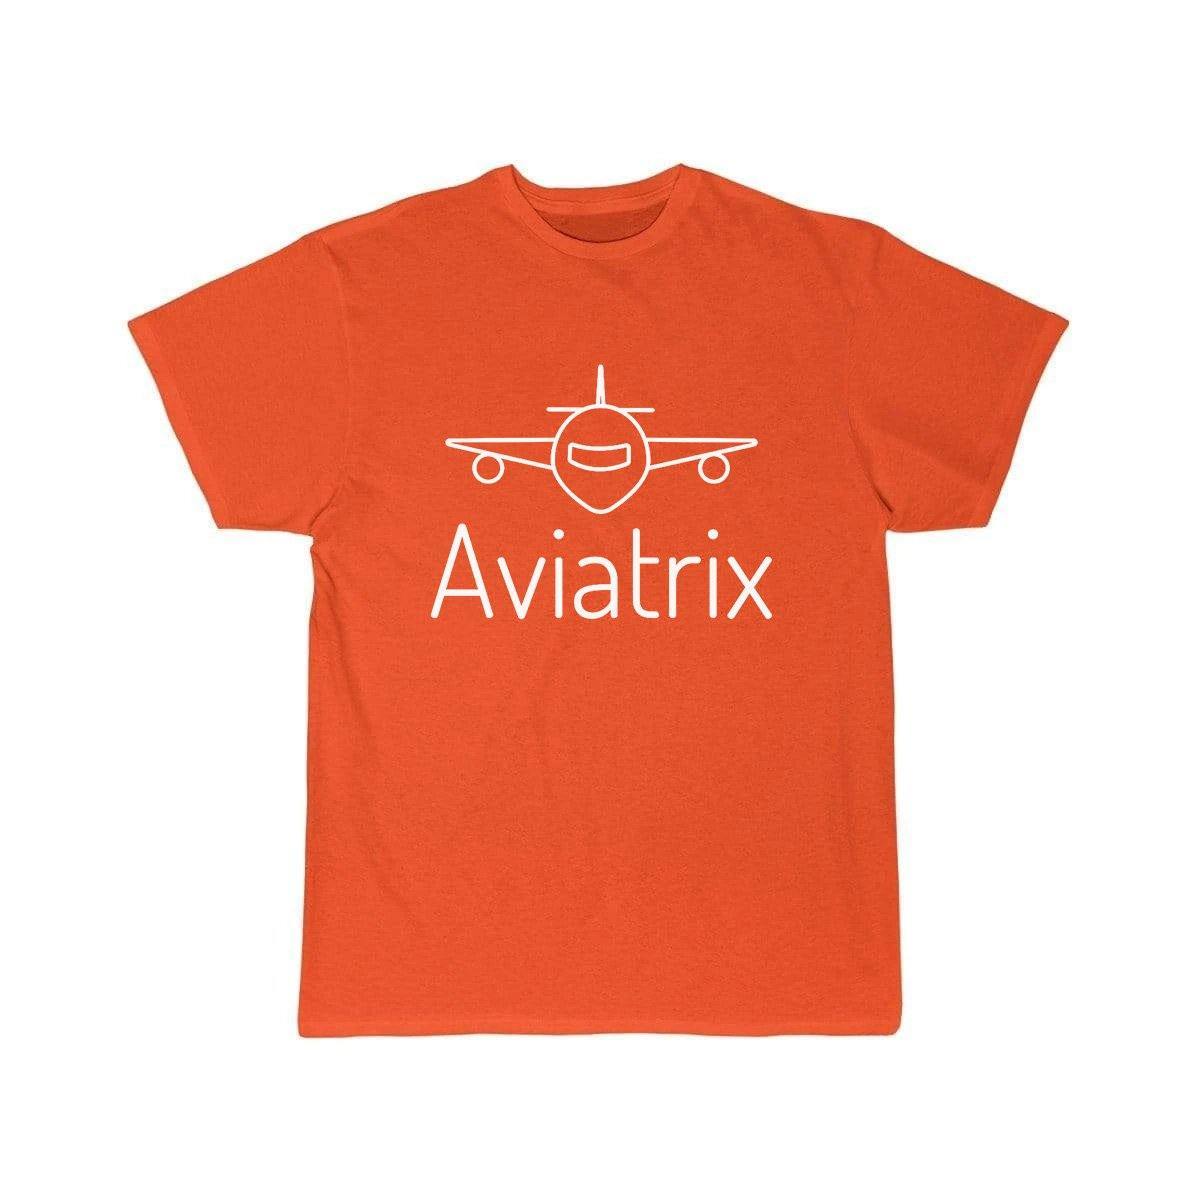 AVIATRIX AND AIRPLANES T-SHIRT THE AV8R